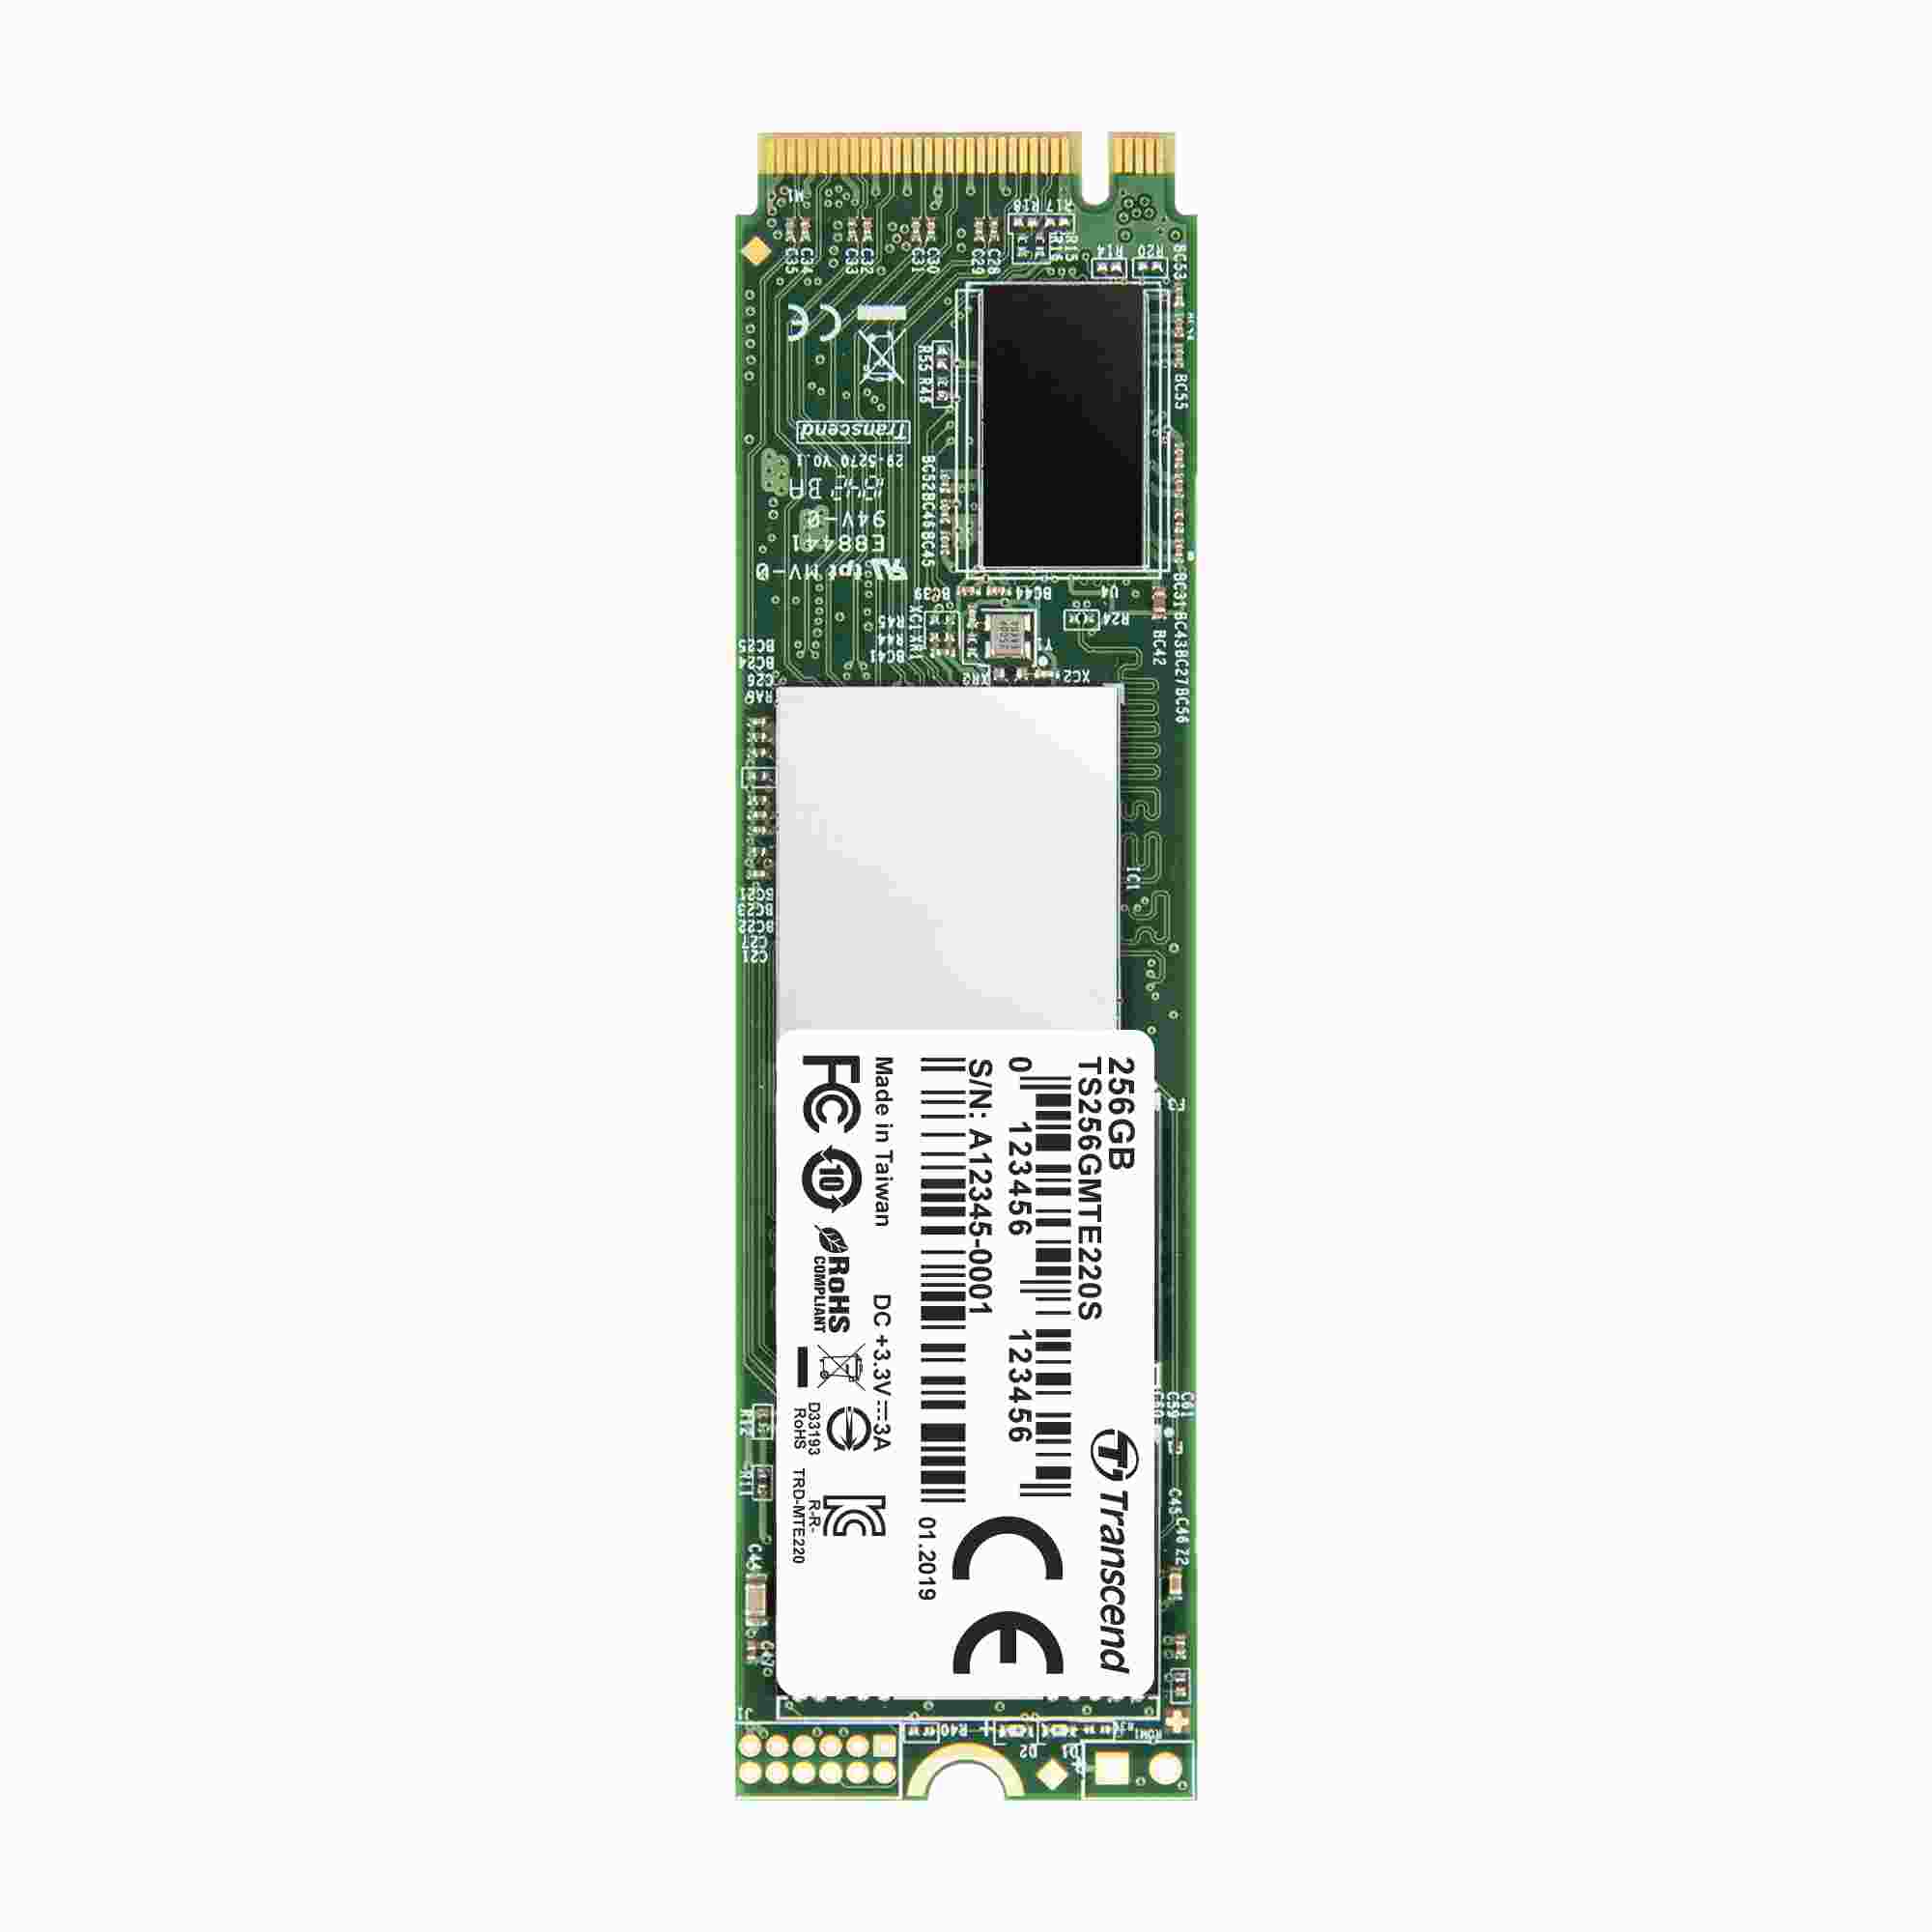 TRANSCEND SSD 220S 256GB,  M.2 2280,  PCIe Gen3x4,  NVMe,  M-Key,  3D TLC,  s Dram0 